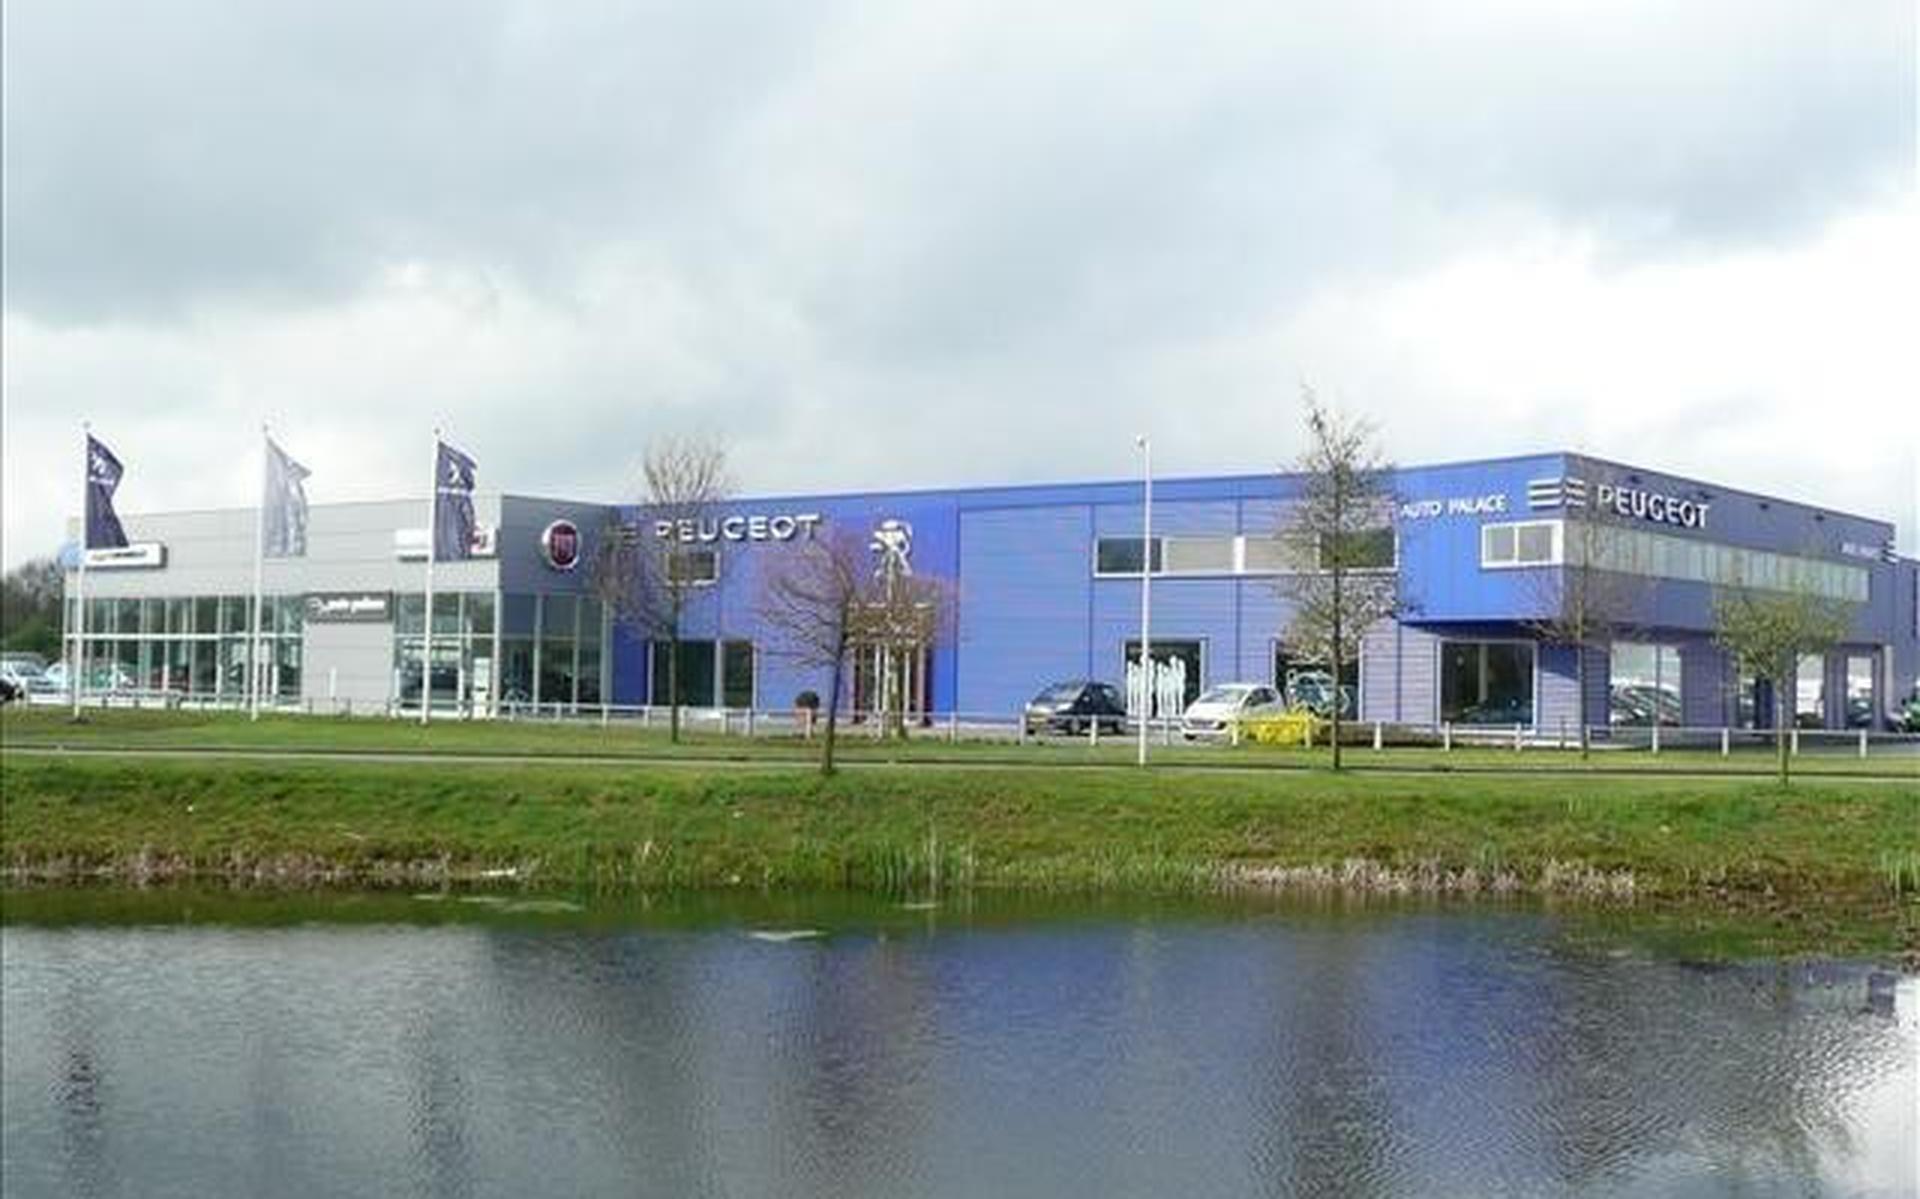 Auto Palace Hoogeveen is gevestigd aan Buitenvaart.